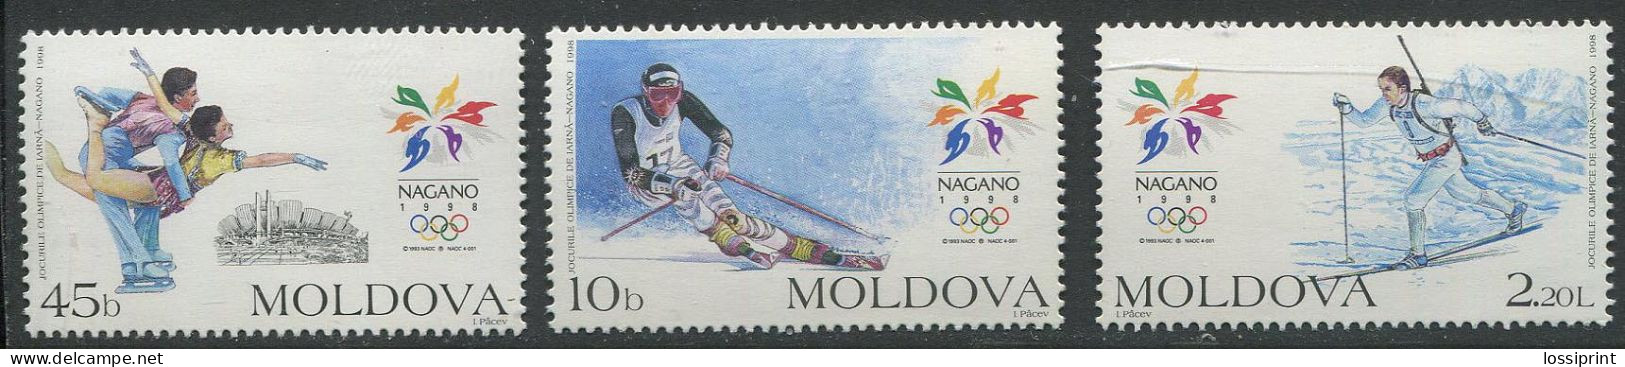 Moldova:Unused Stamps Serie Nagano Olympic Games 1998, Figure Skating, Slalom, Biathlon, MNH - Hiver 1998: Nagano